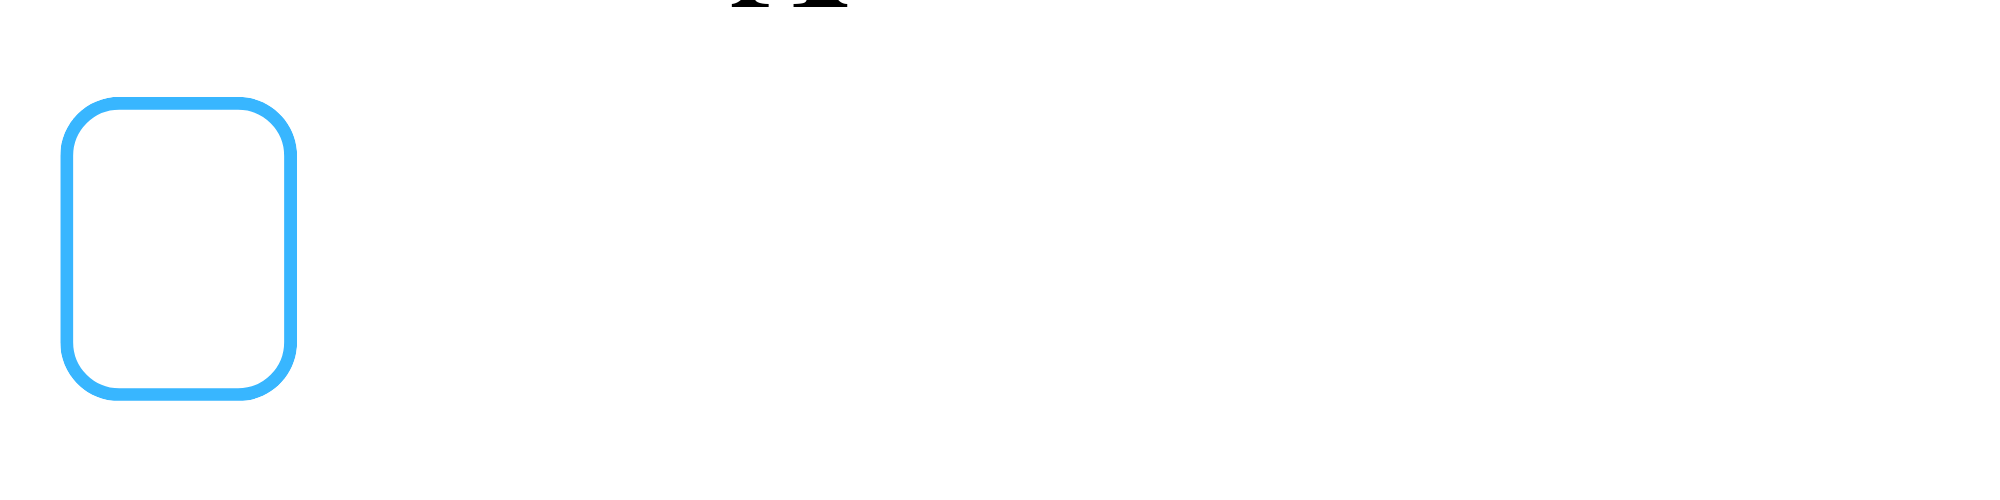 Best Skin care tips